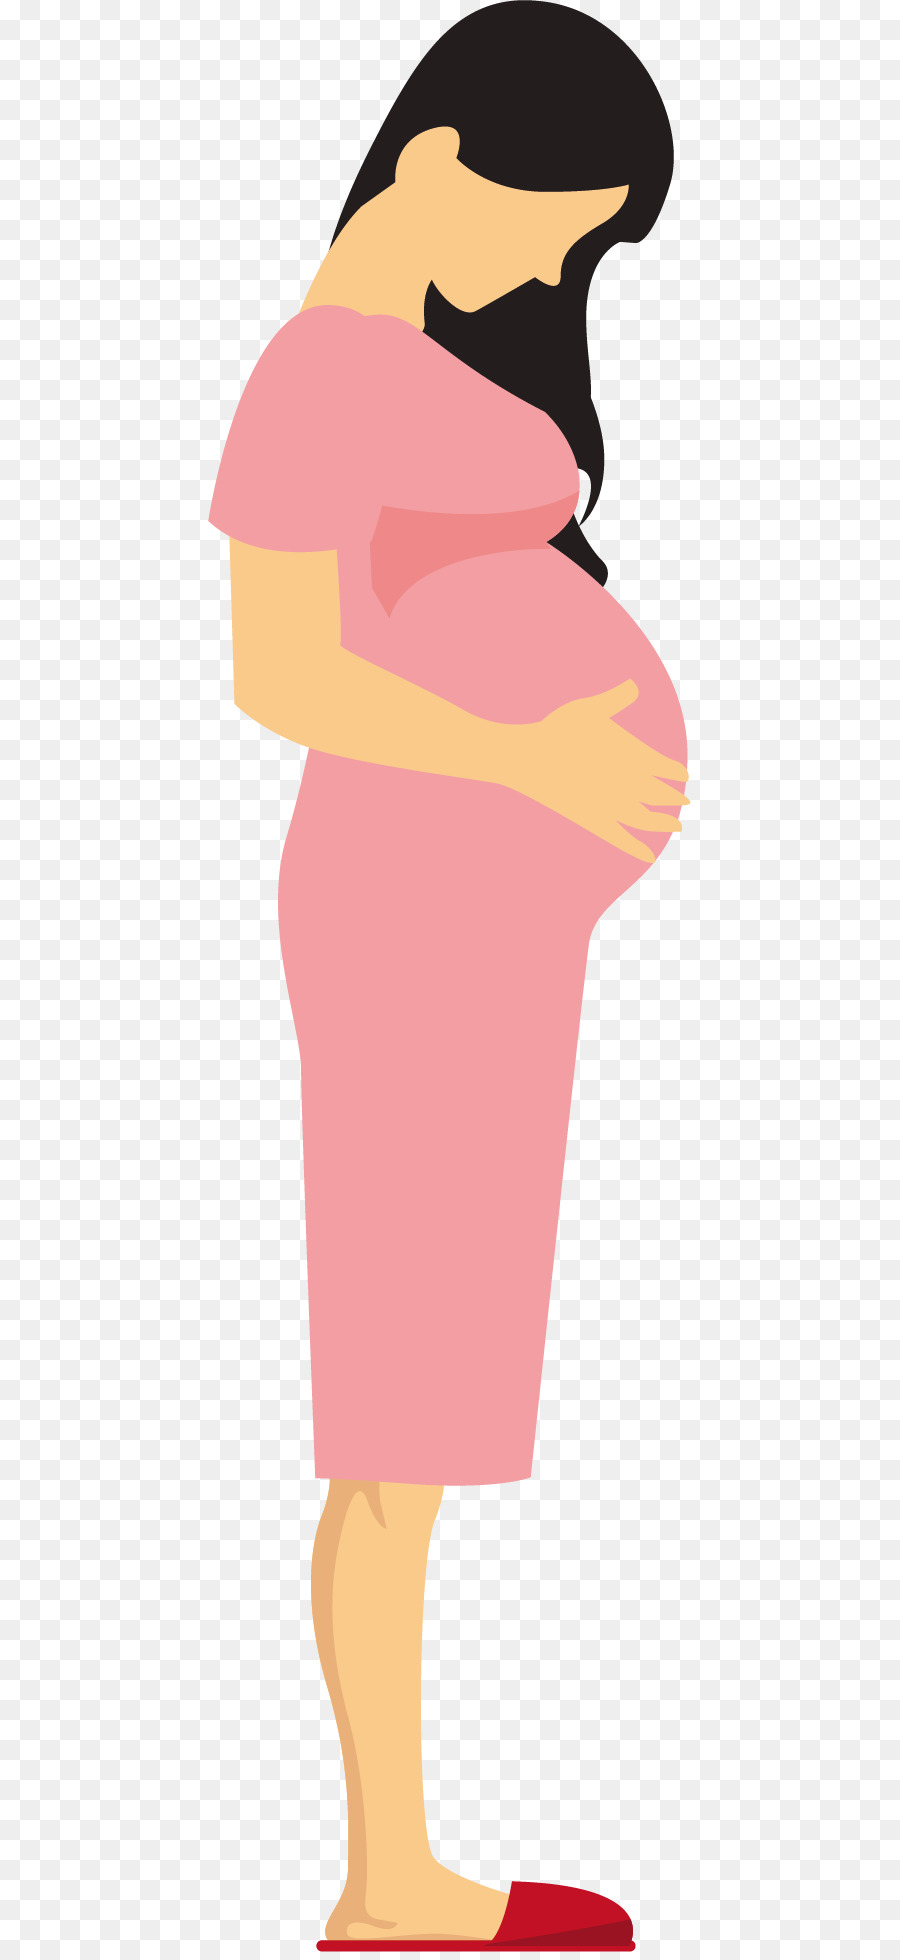 Pregnancy Illustration - Character outline png download - 483*1952 - Free Transparent Pregnancy png Download.